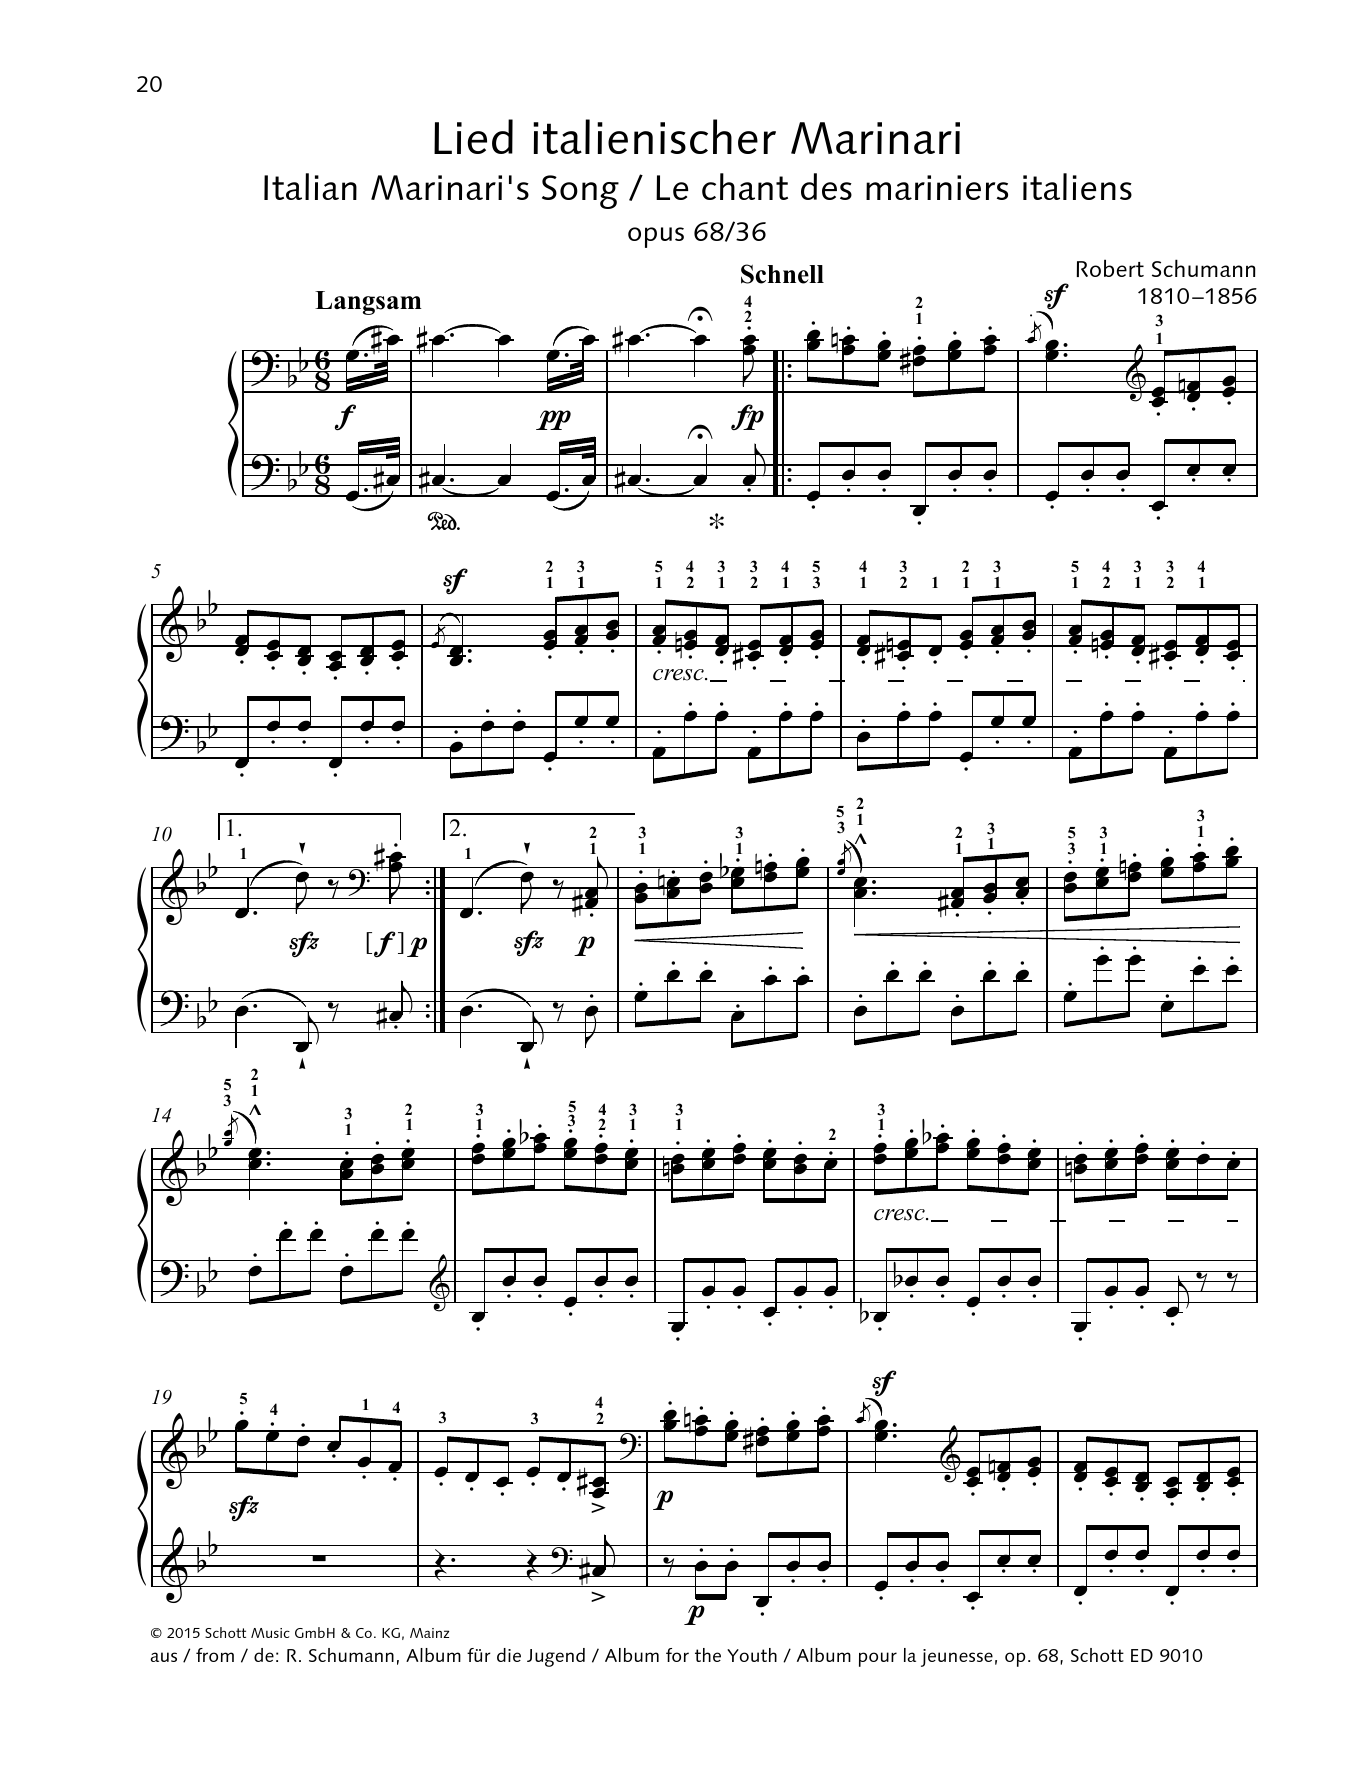 Robert Schumann Italian Marinari's Song Sheet Music Notes & Chords for Piano Solo - Download or Print PDF